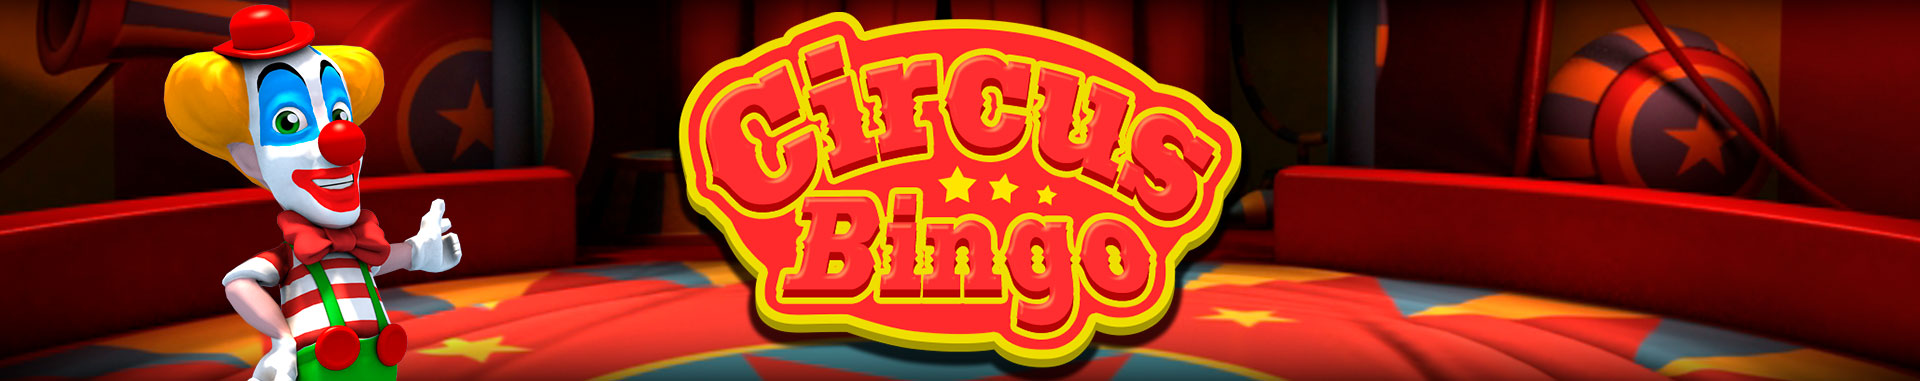 Video Bingo Online Circus